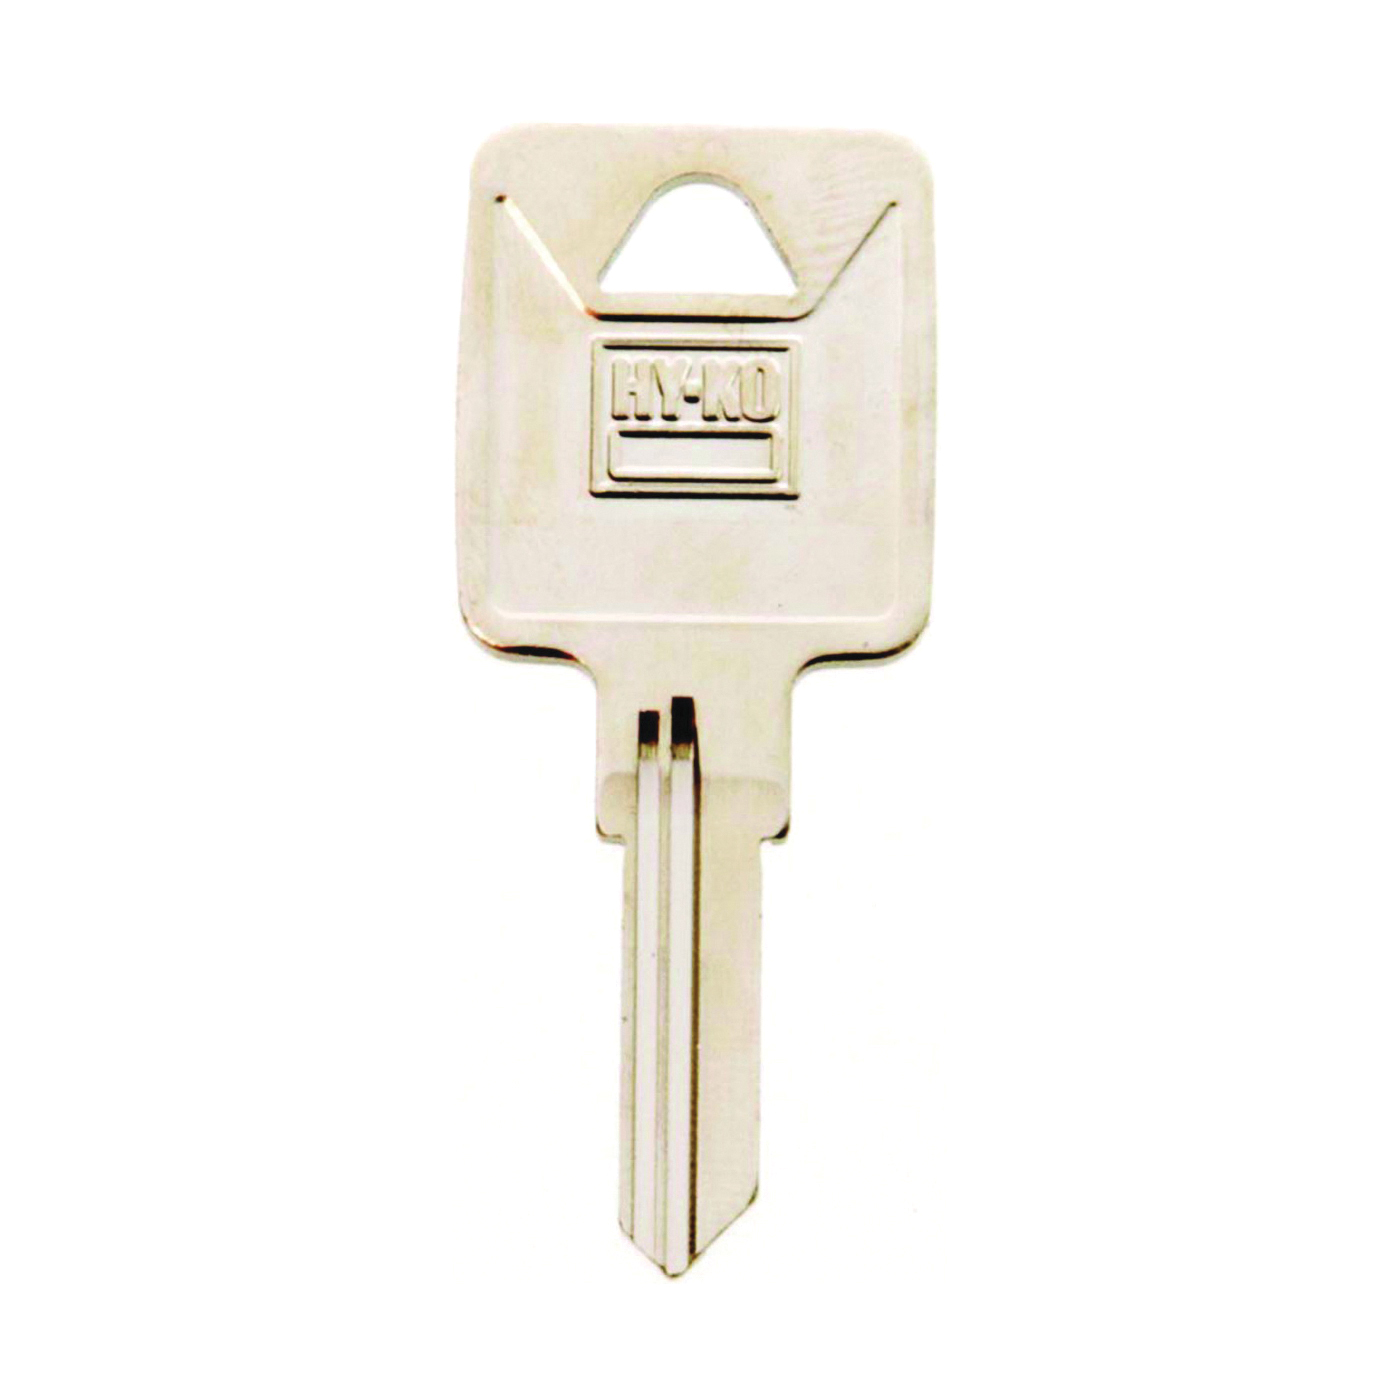 HY-KO 11010TM1 Key Blank, Brass, Nickel, For: Trimark Cabinet, House Locks and Padlocks - 1